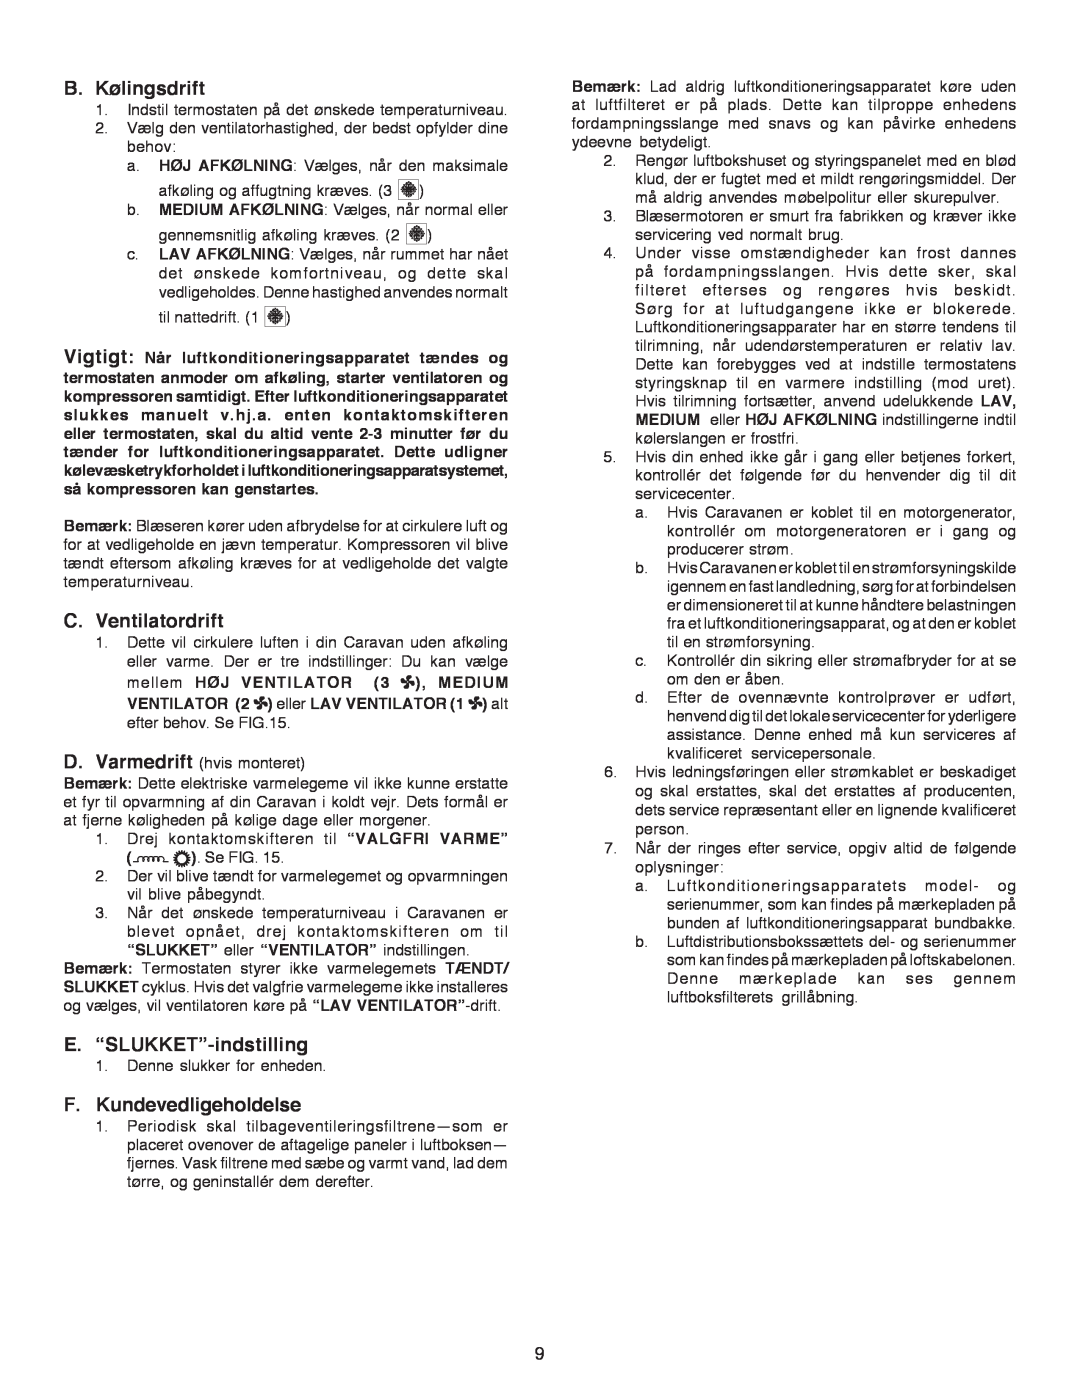 Dometic B3200 manual B.Kølingsdrift, C.Ventilatordrift, E.“SLUKKET”-indstilling, F.Kundevedligeholdelse 